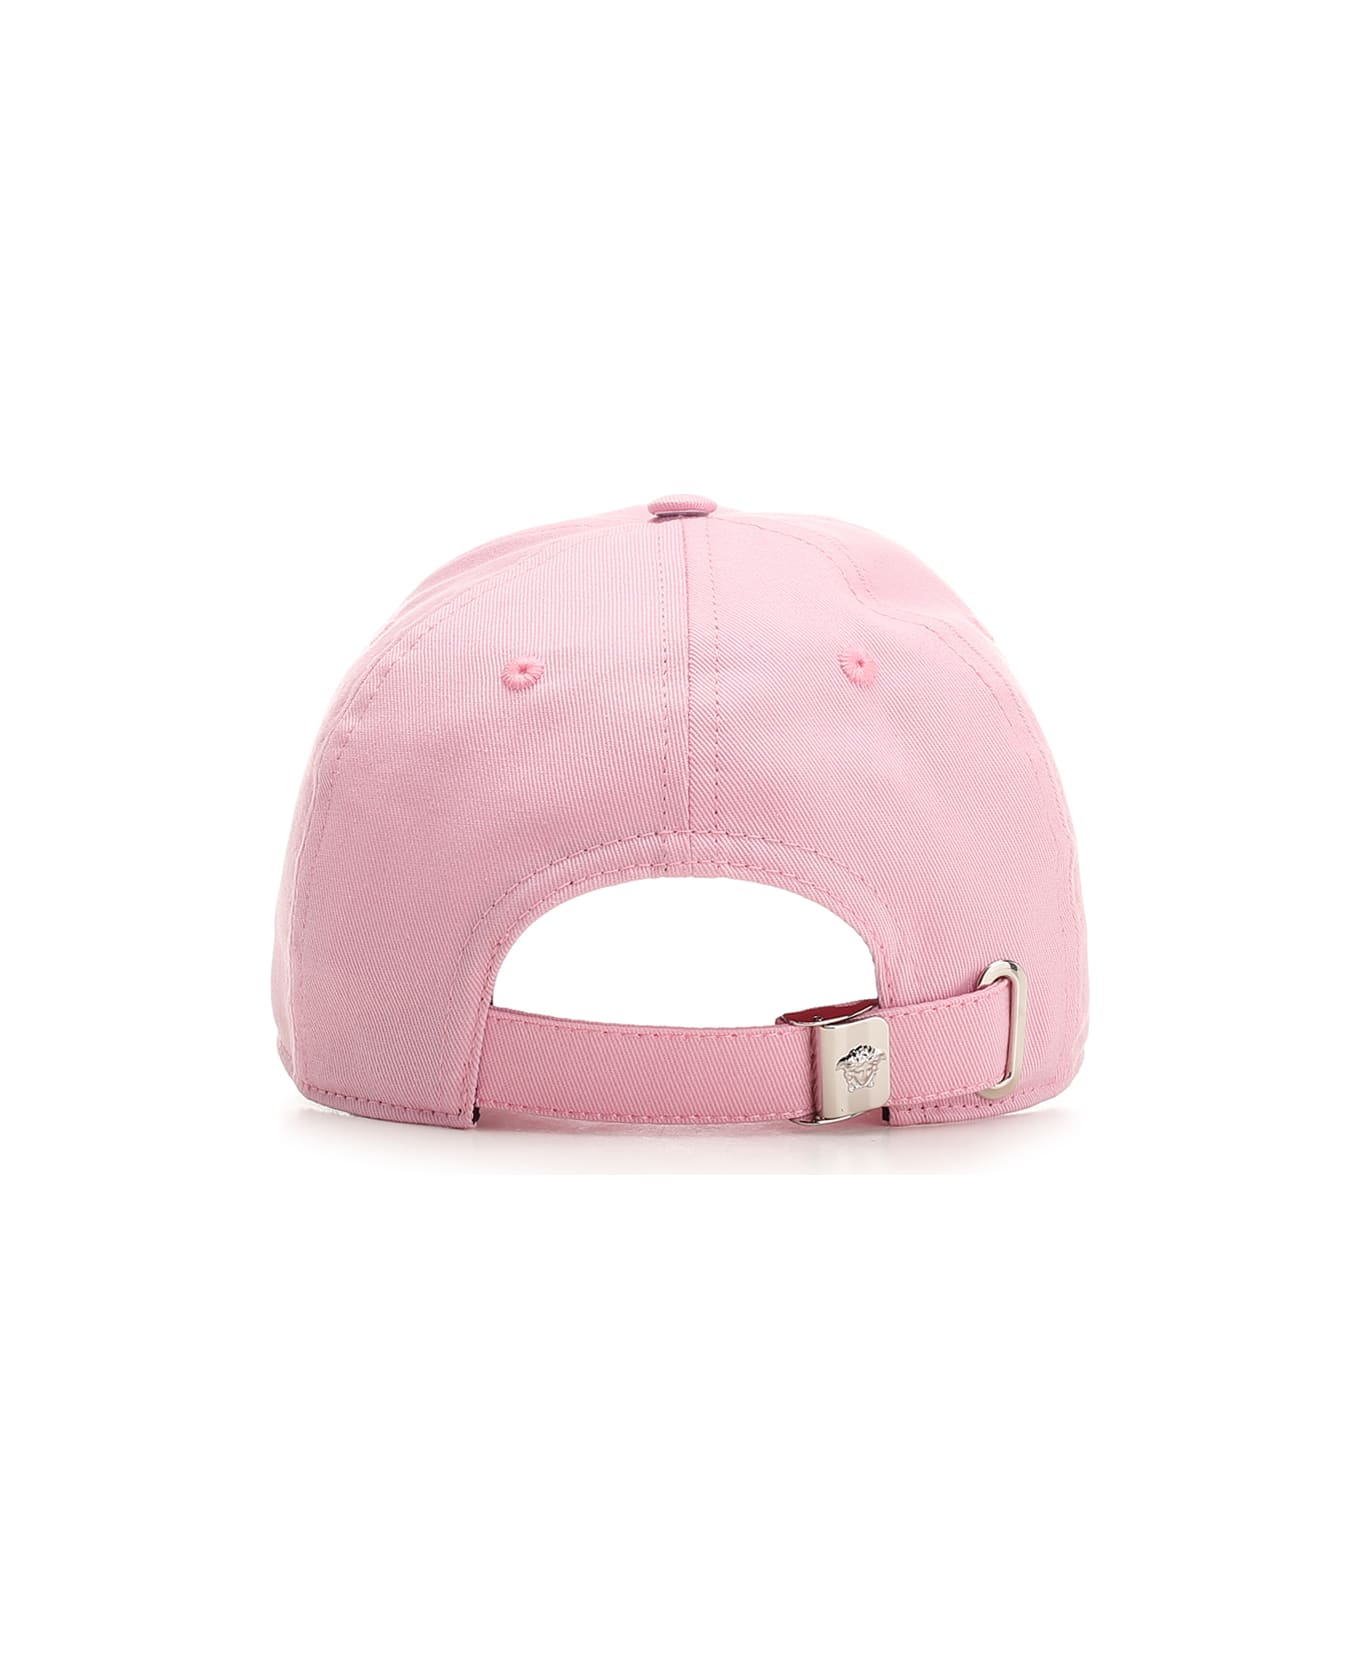 Versace Baseball Hat - PINK